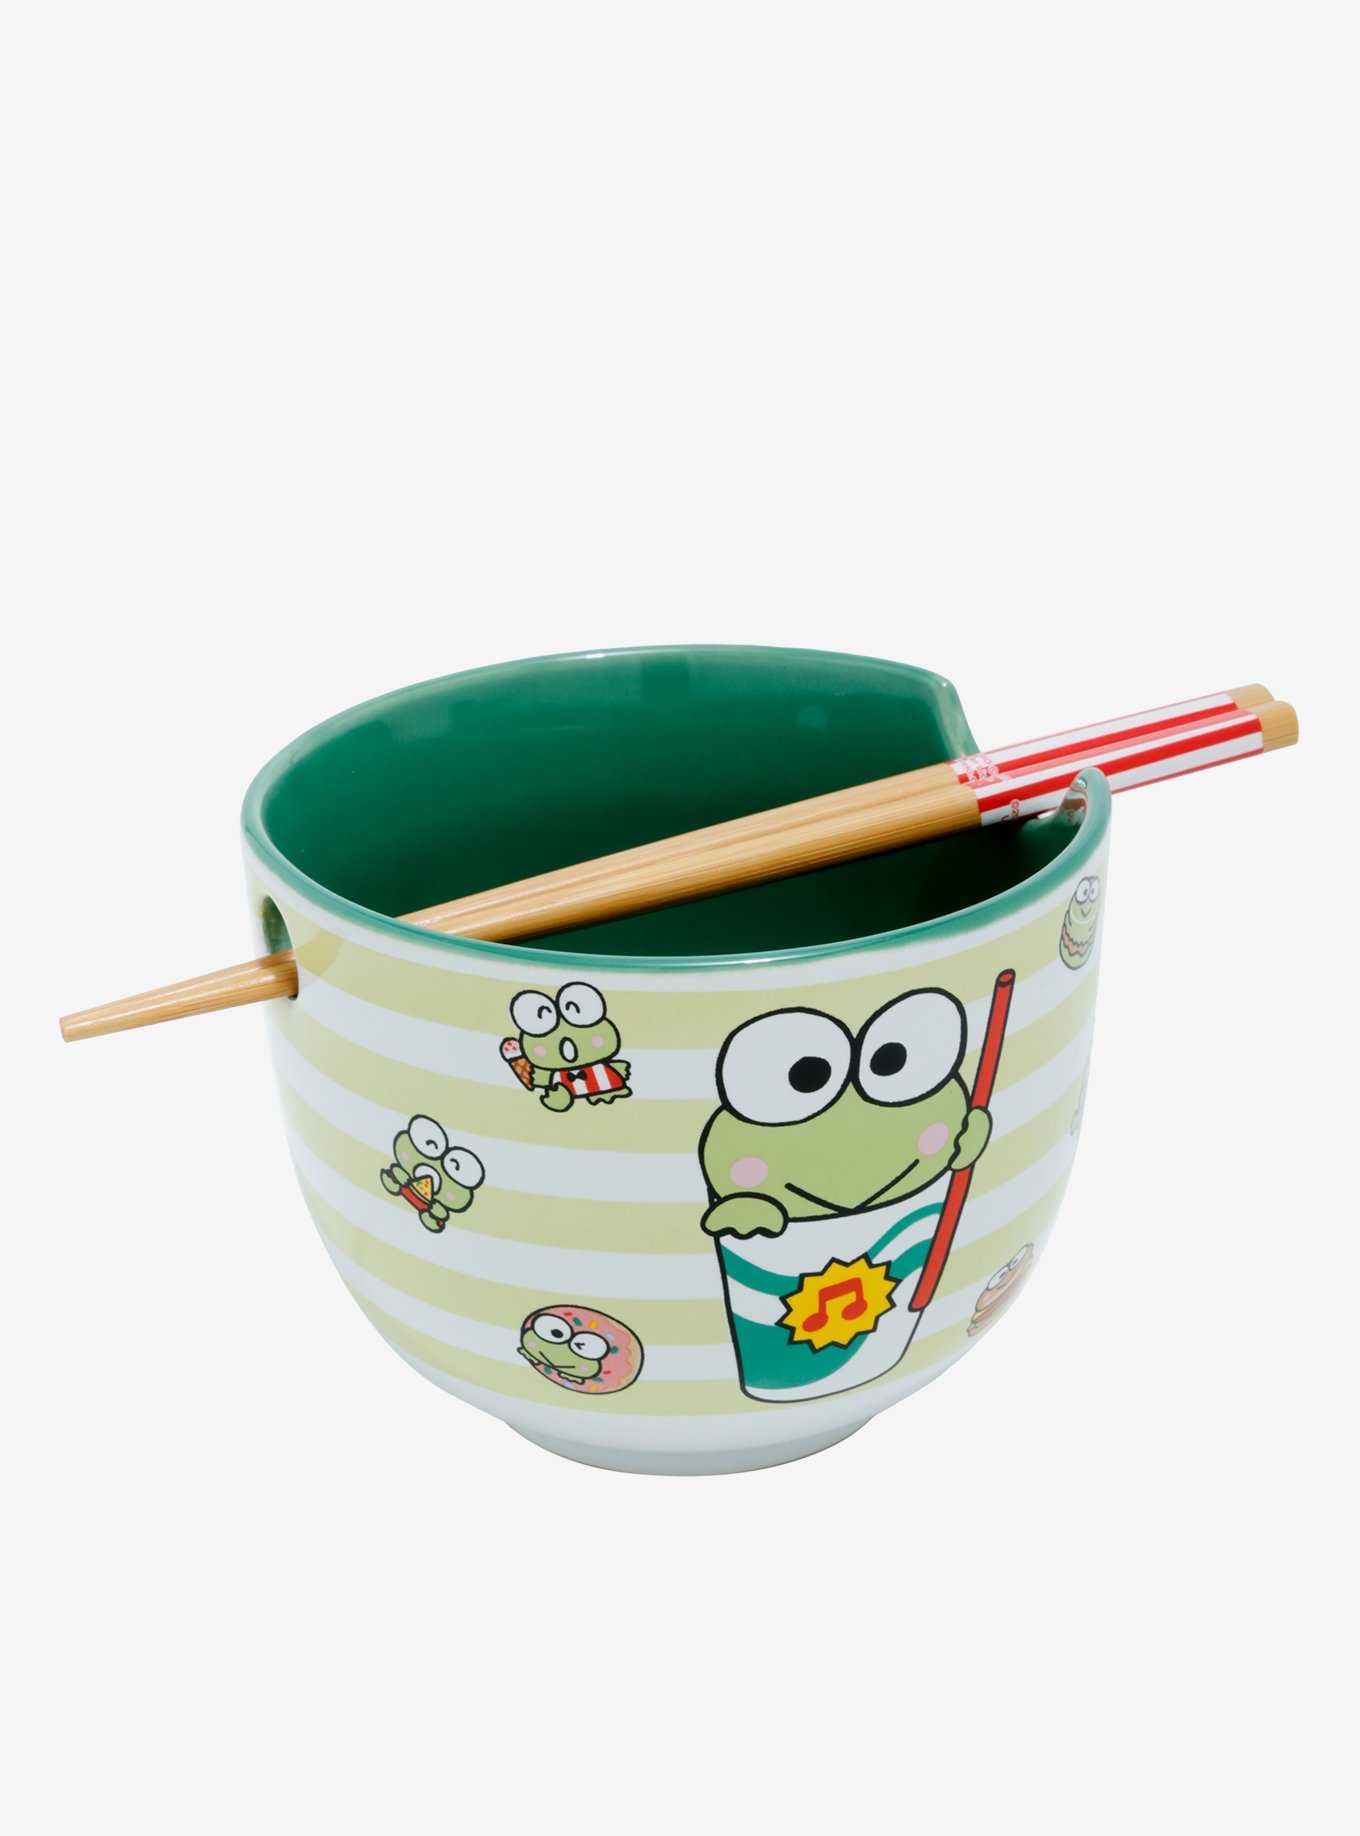 Keroppi Snacks Ramen Bowl With Chopsticks, , hi-res